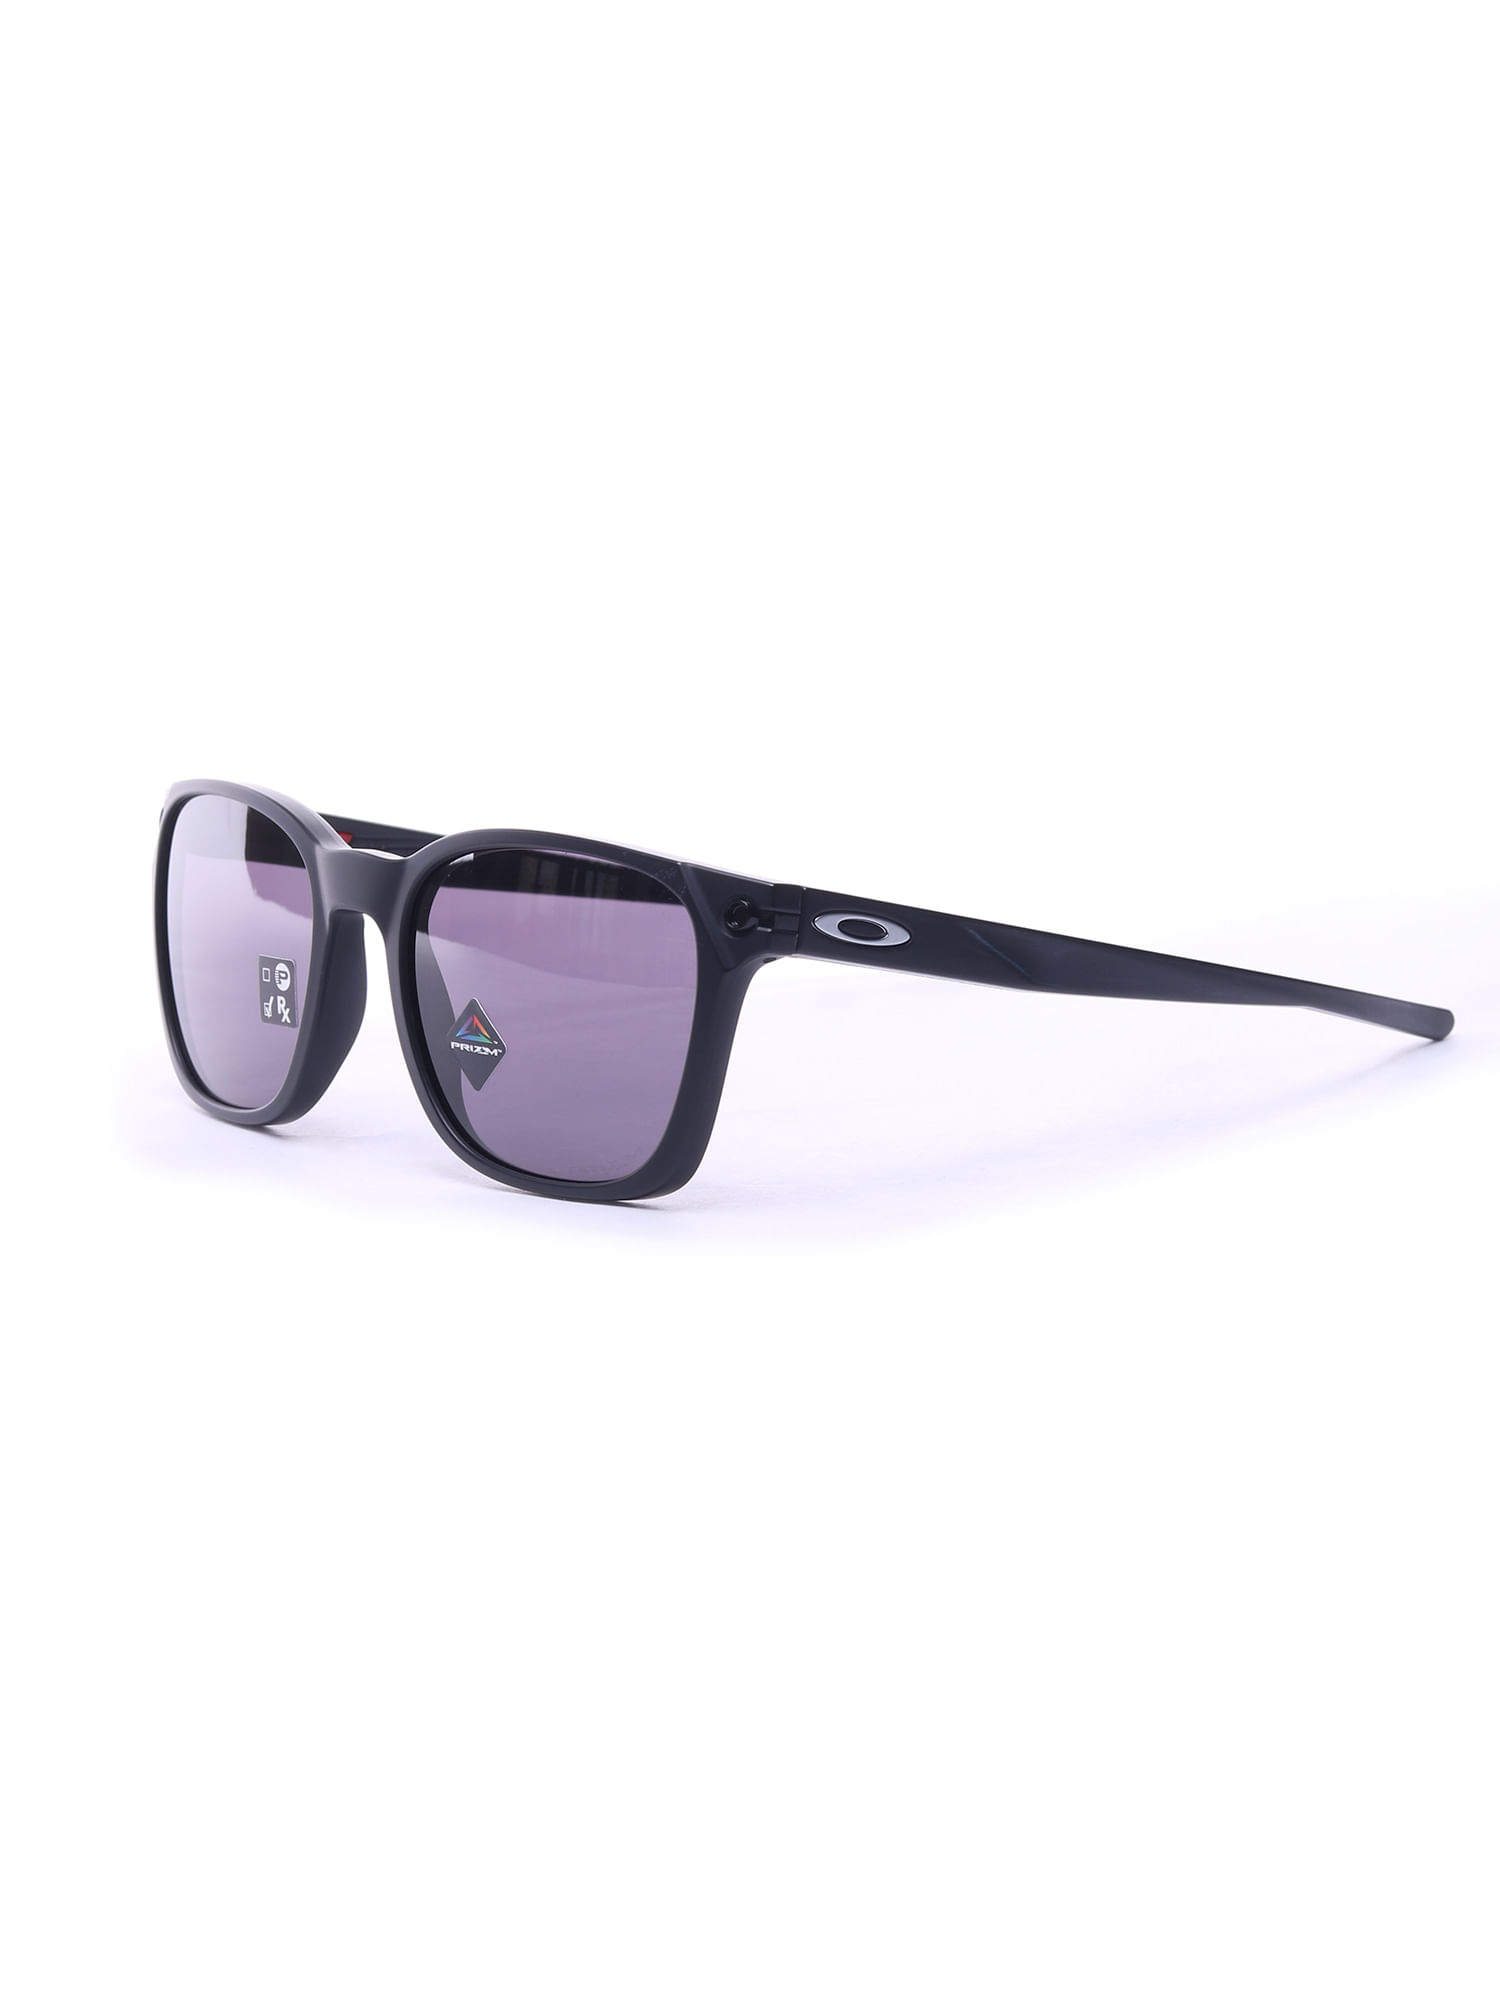 Óculos de Sol Oakley Holbrook XL Matte Black Warm Grey Prizm - Unissex em  Promoção